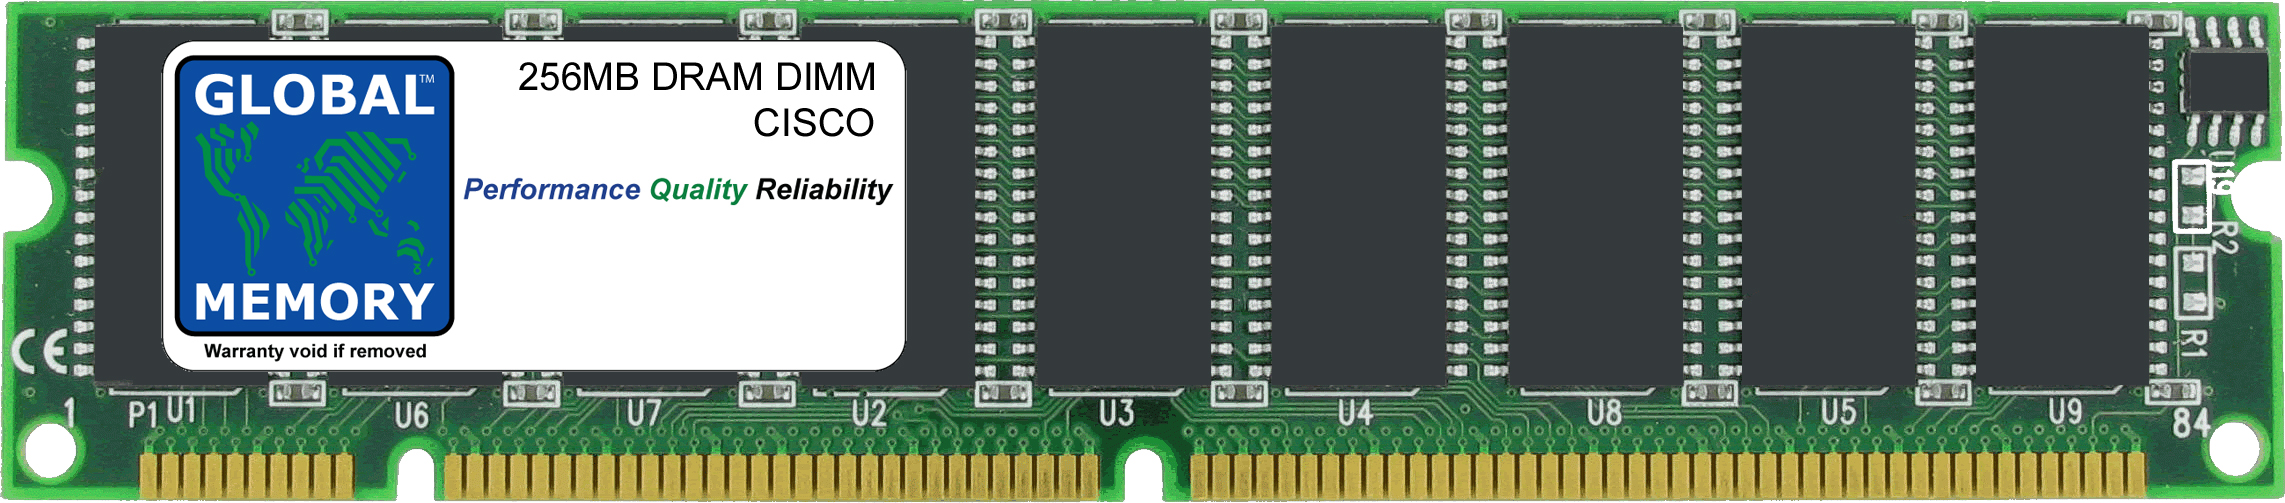 256MB DRAM DIMM MEMORY RAM FOR CISCO 7400 ASR / 7400 VPN ROUTERS (MEM-7400ASR-256MB) - Click Image to Close